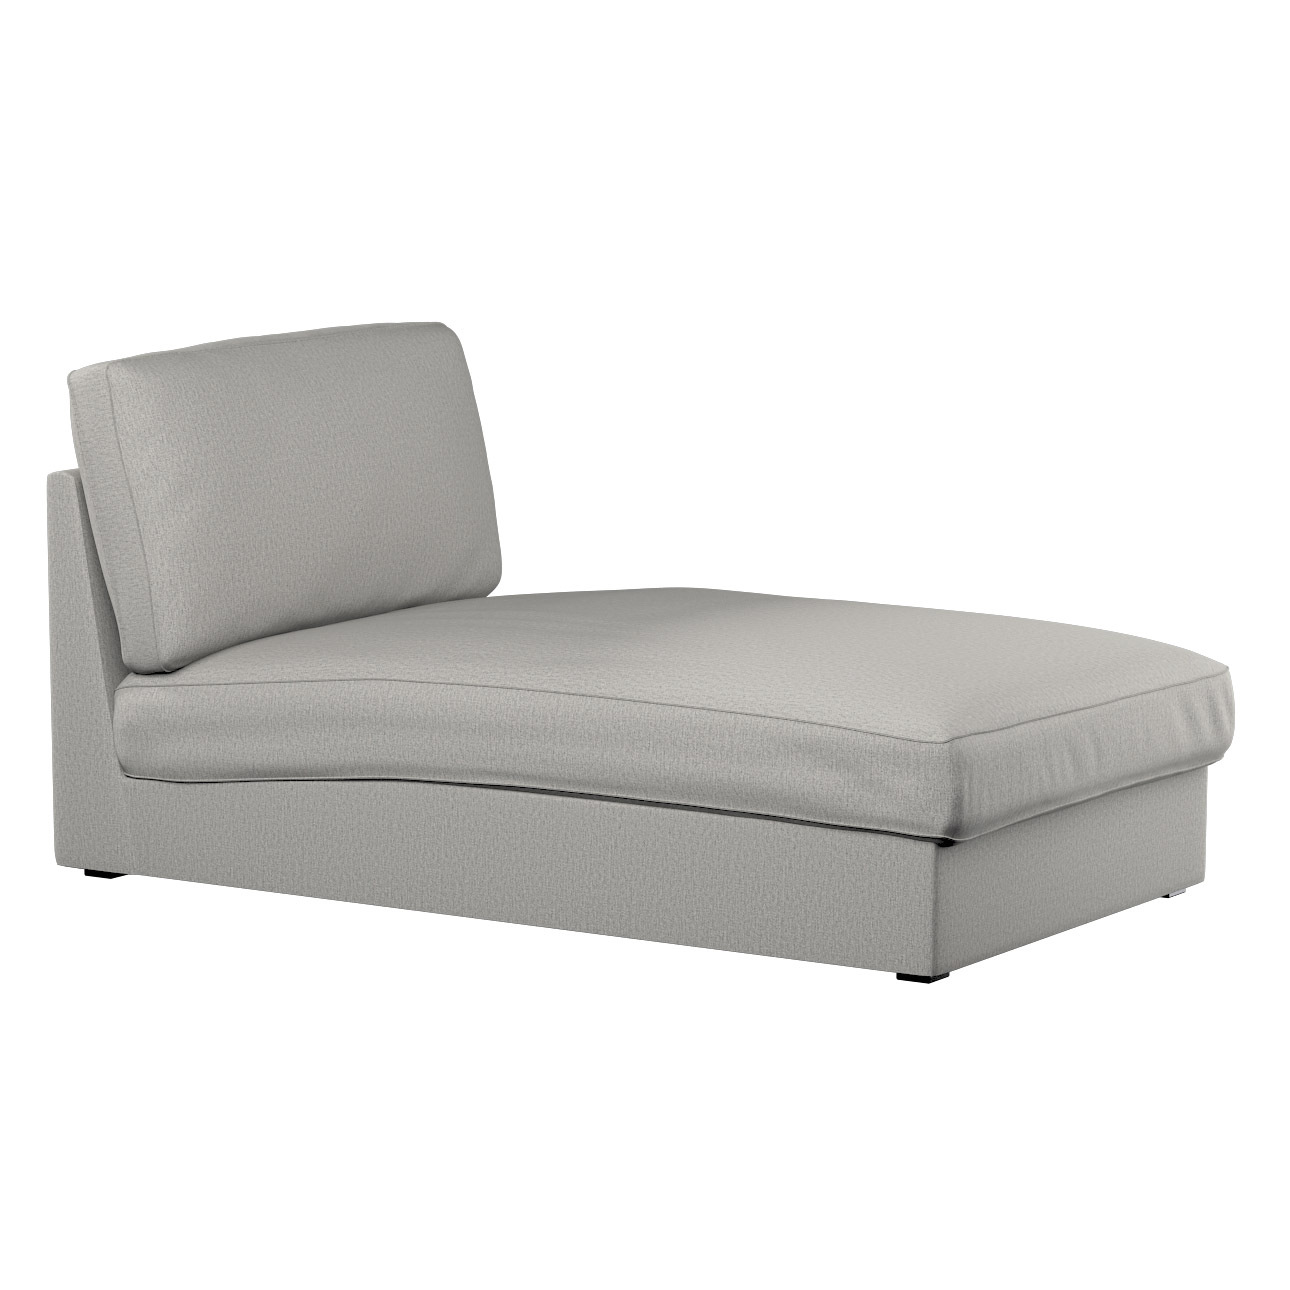 Bezug für Kivik Recamiere Sofa, grau-beige, Bezug für Kivik Recamiere, Madr günstig online kaufen